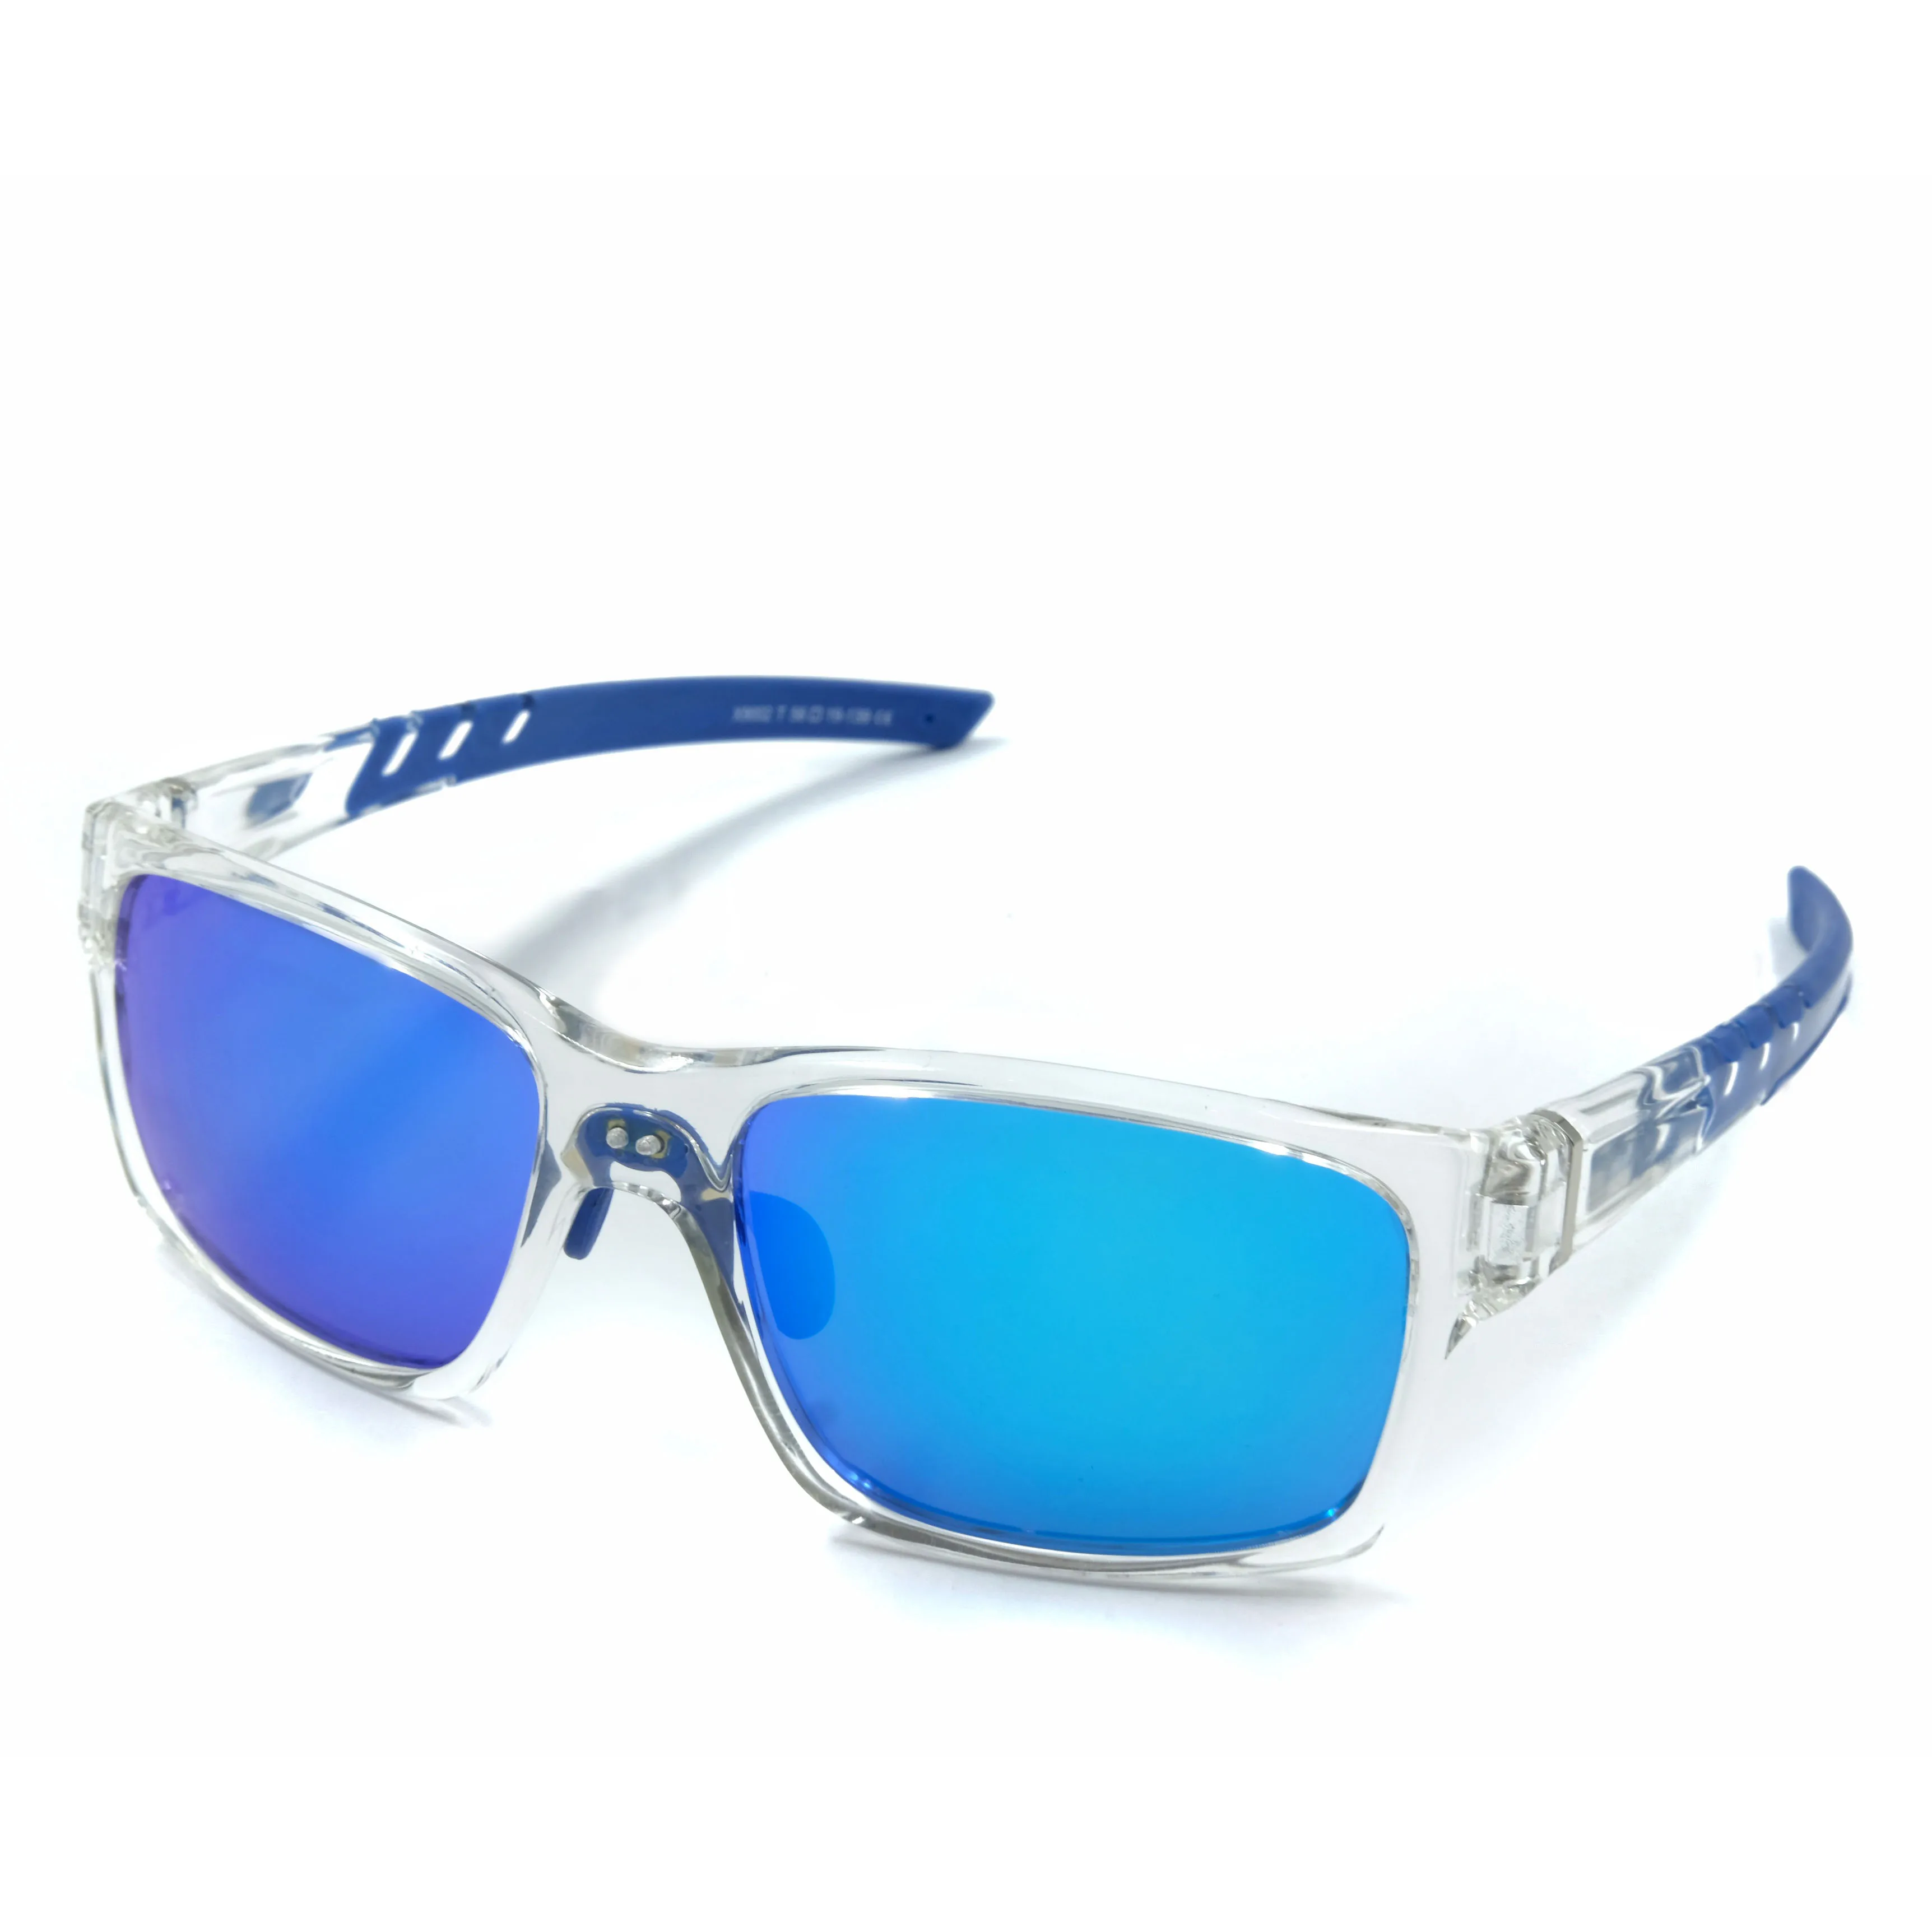 

Blue coatting Sun glasses river contact lenses polarized ray ban men sports sunglasses 2021 women shades fishing riding Hiking